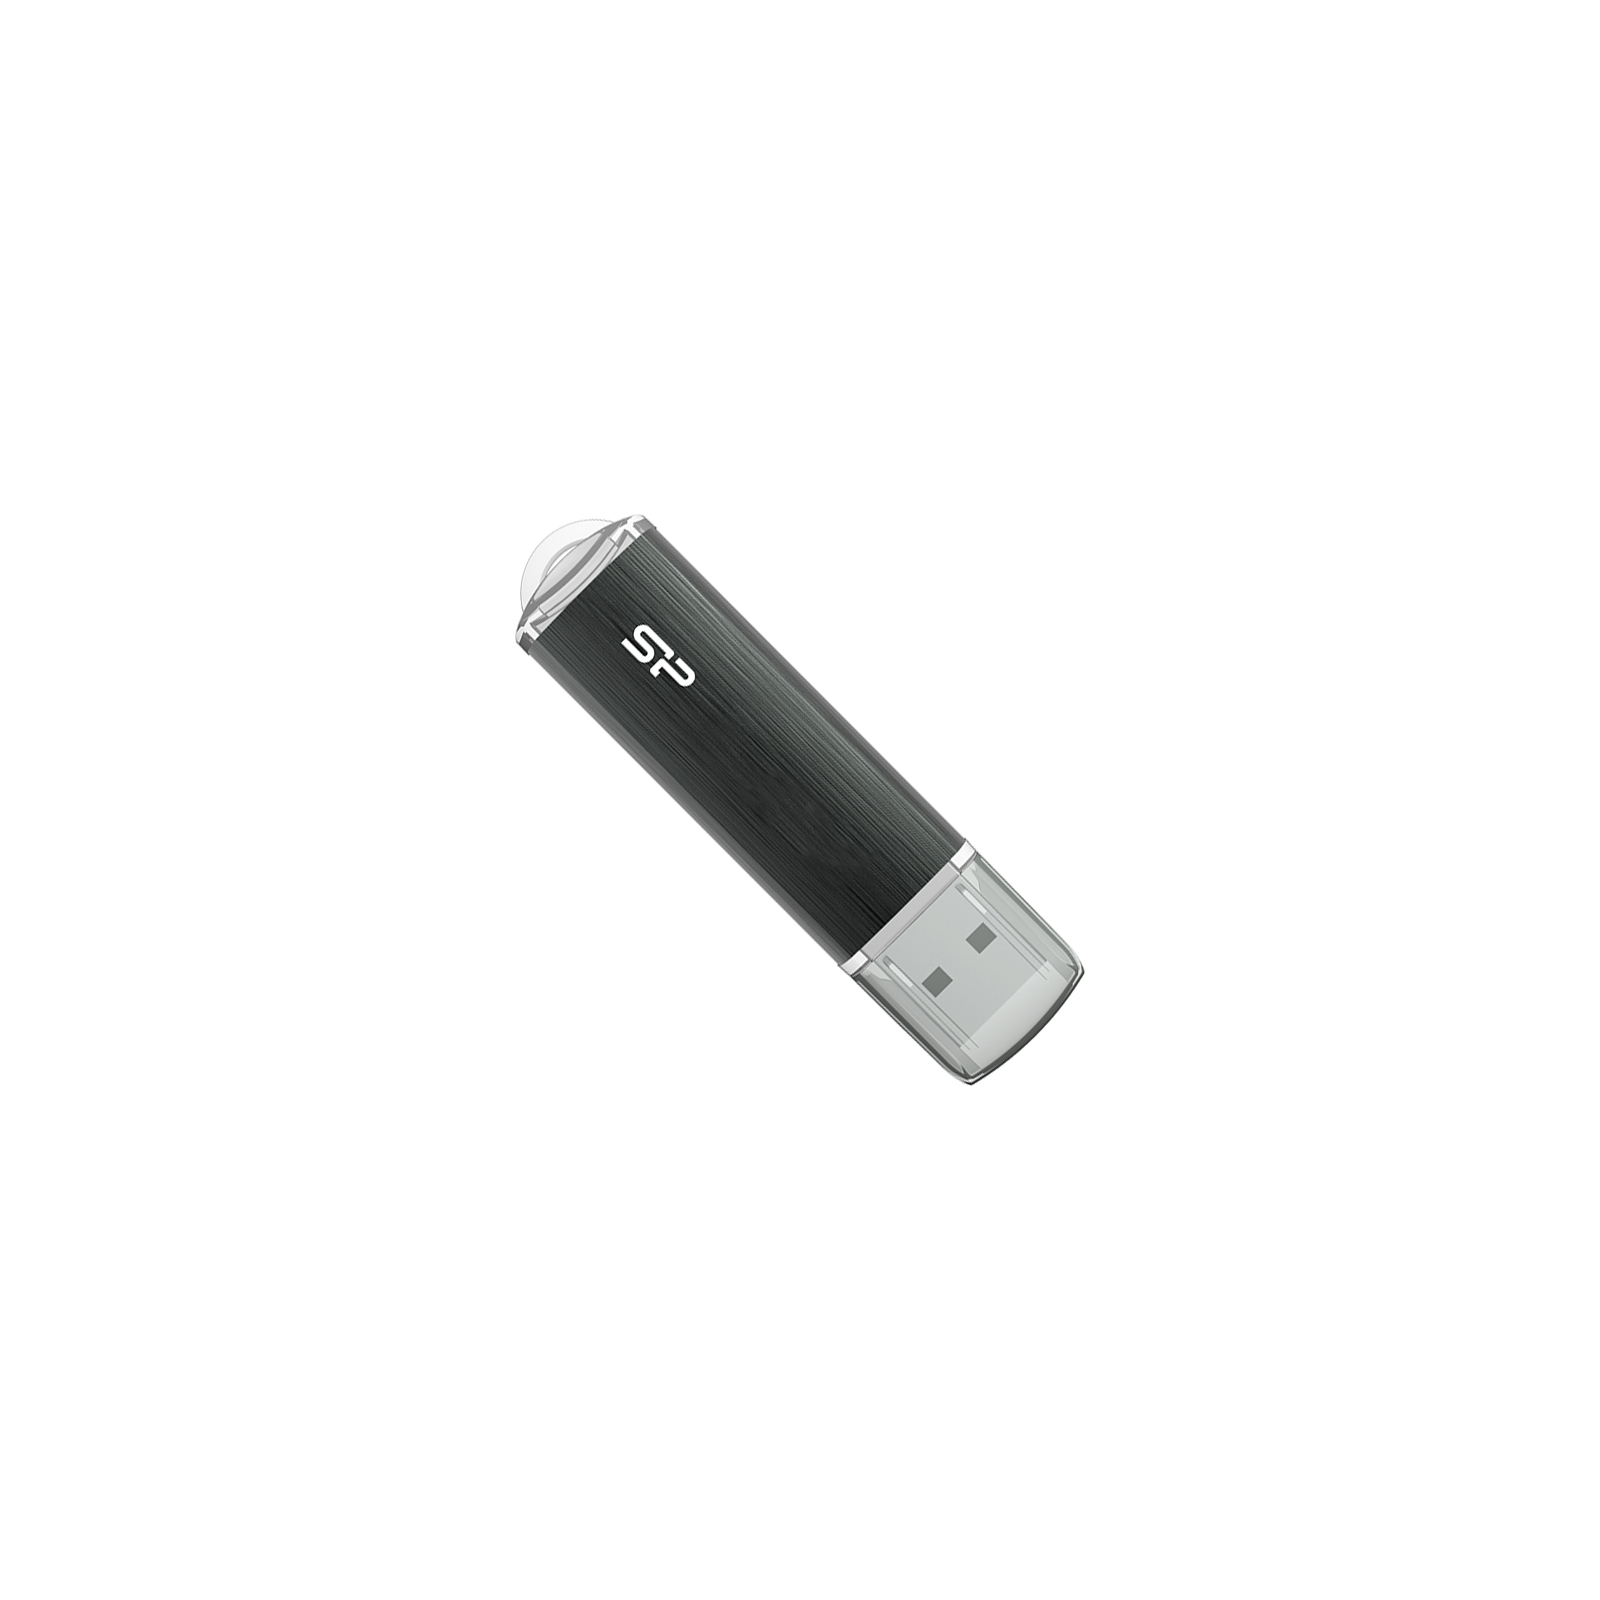 USB флеш накопичувач Silicon Power 500 GB Silicon Marvel Xtreme M80 USB 3.2 (SP500GBUF3M80V1G)